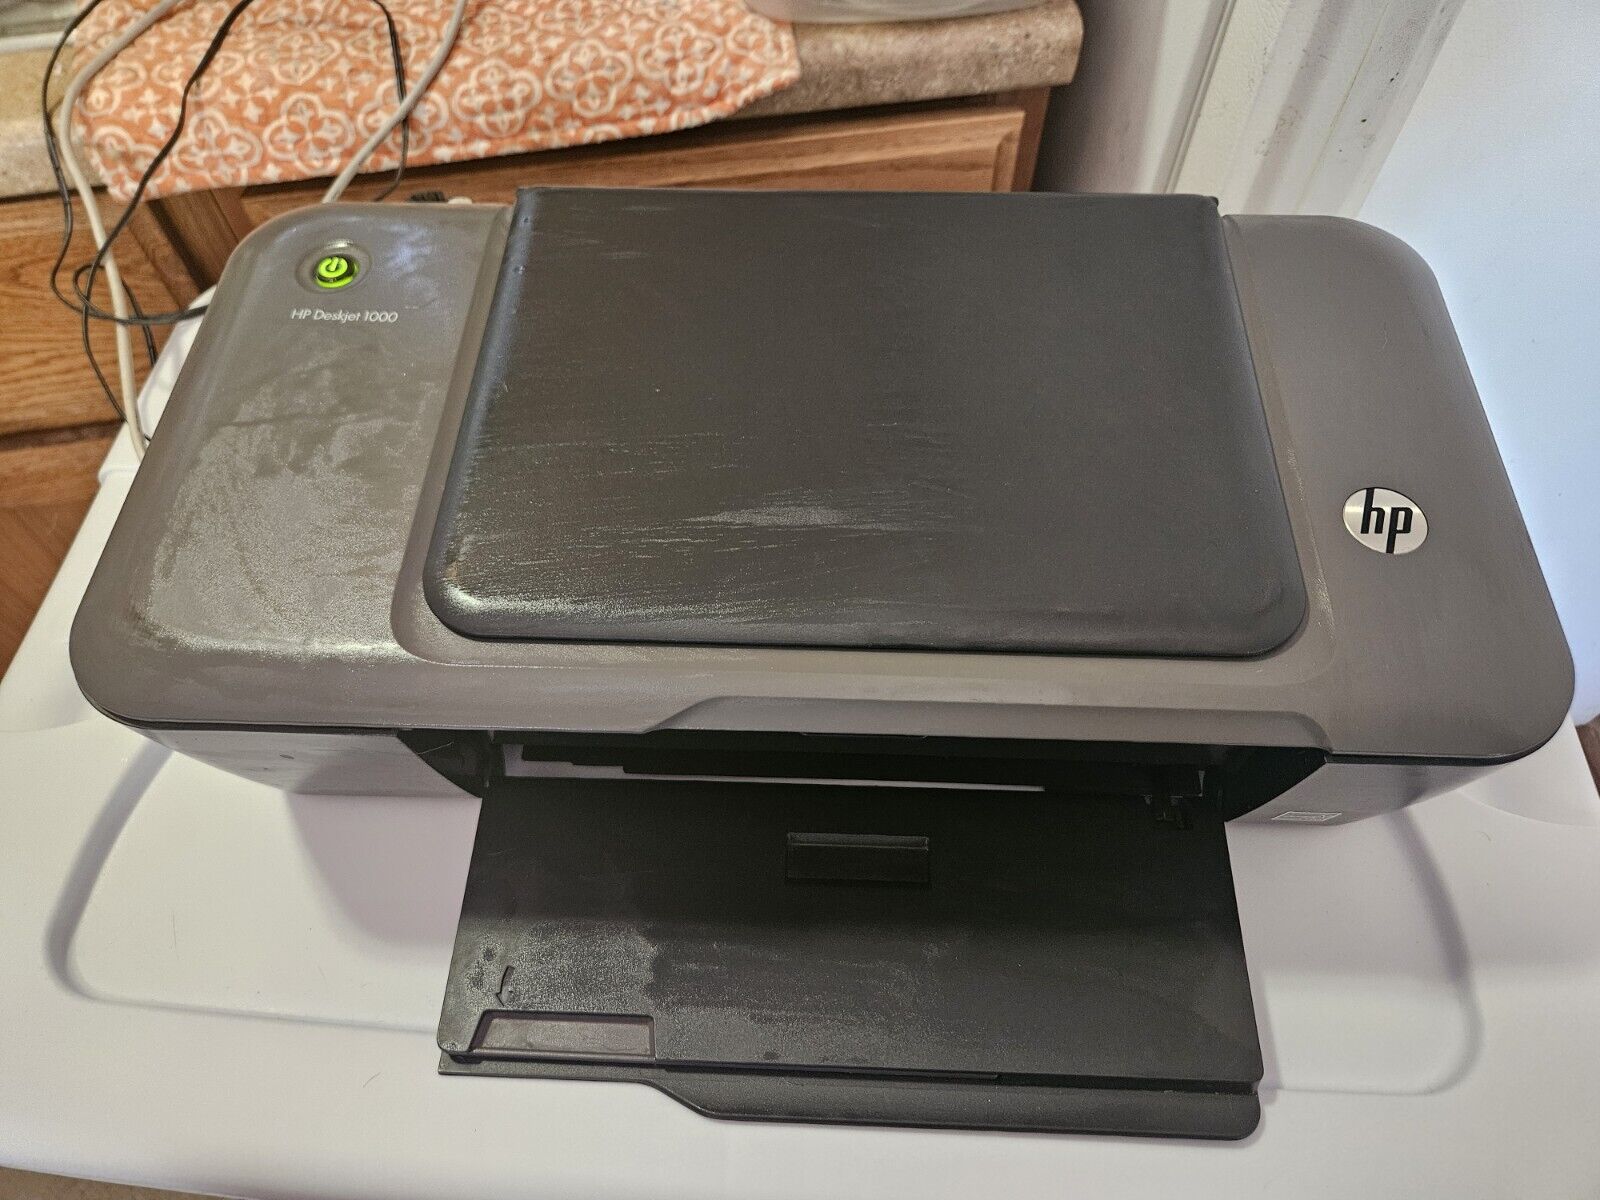 HP Deskjet 1000 J110a Standard Inkjet Printer W/ Power Cord